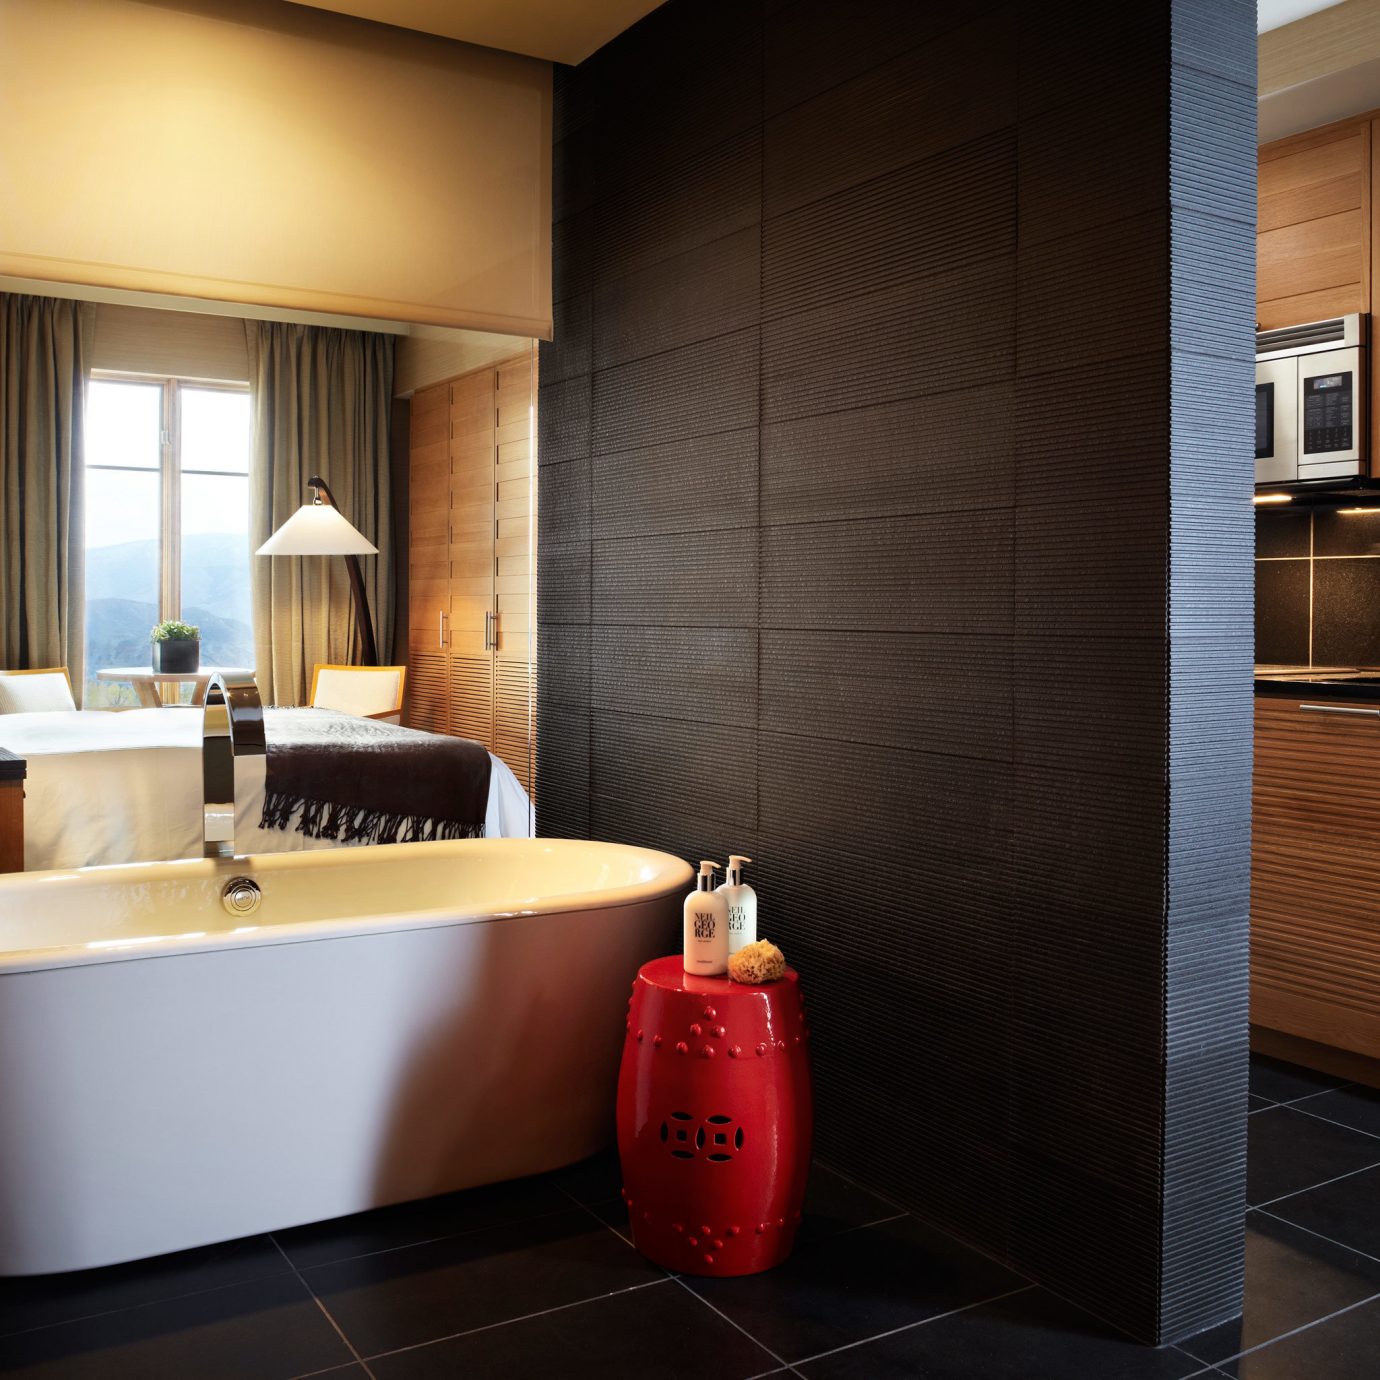 Bath Bedroom Luxury Scenic views bathroom property Suite home bathtub plumbing fixture tub tiled